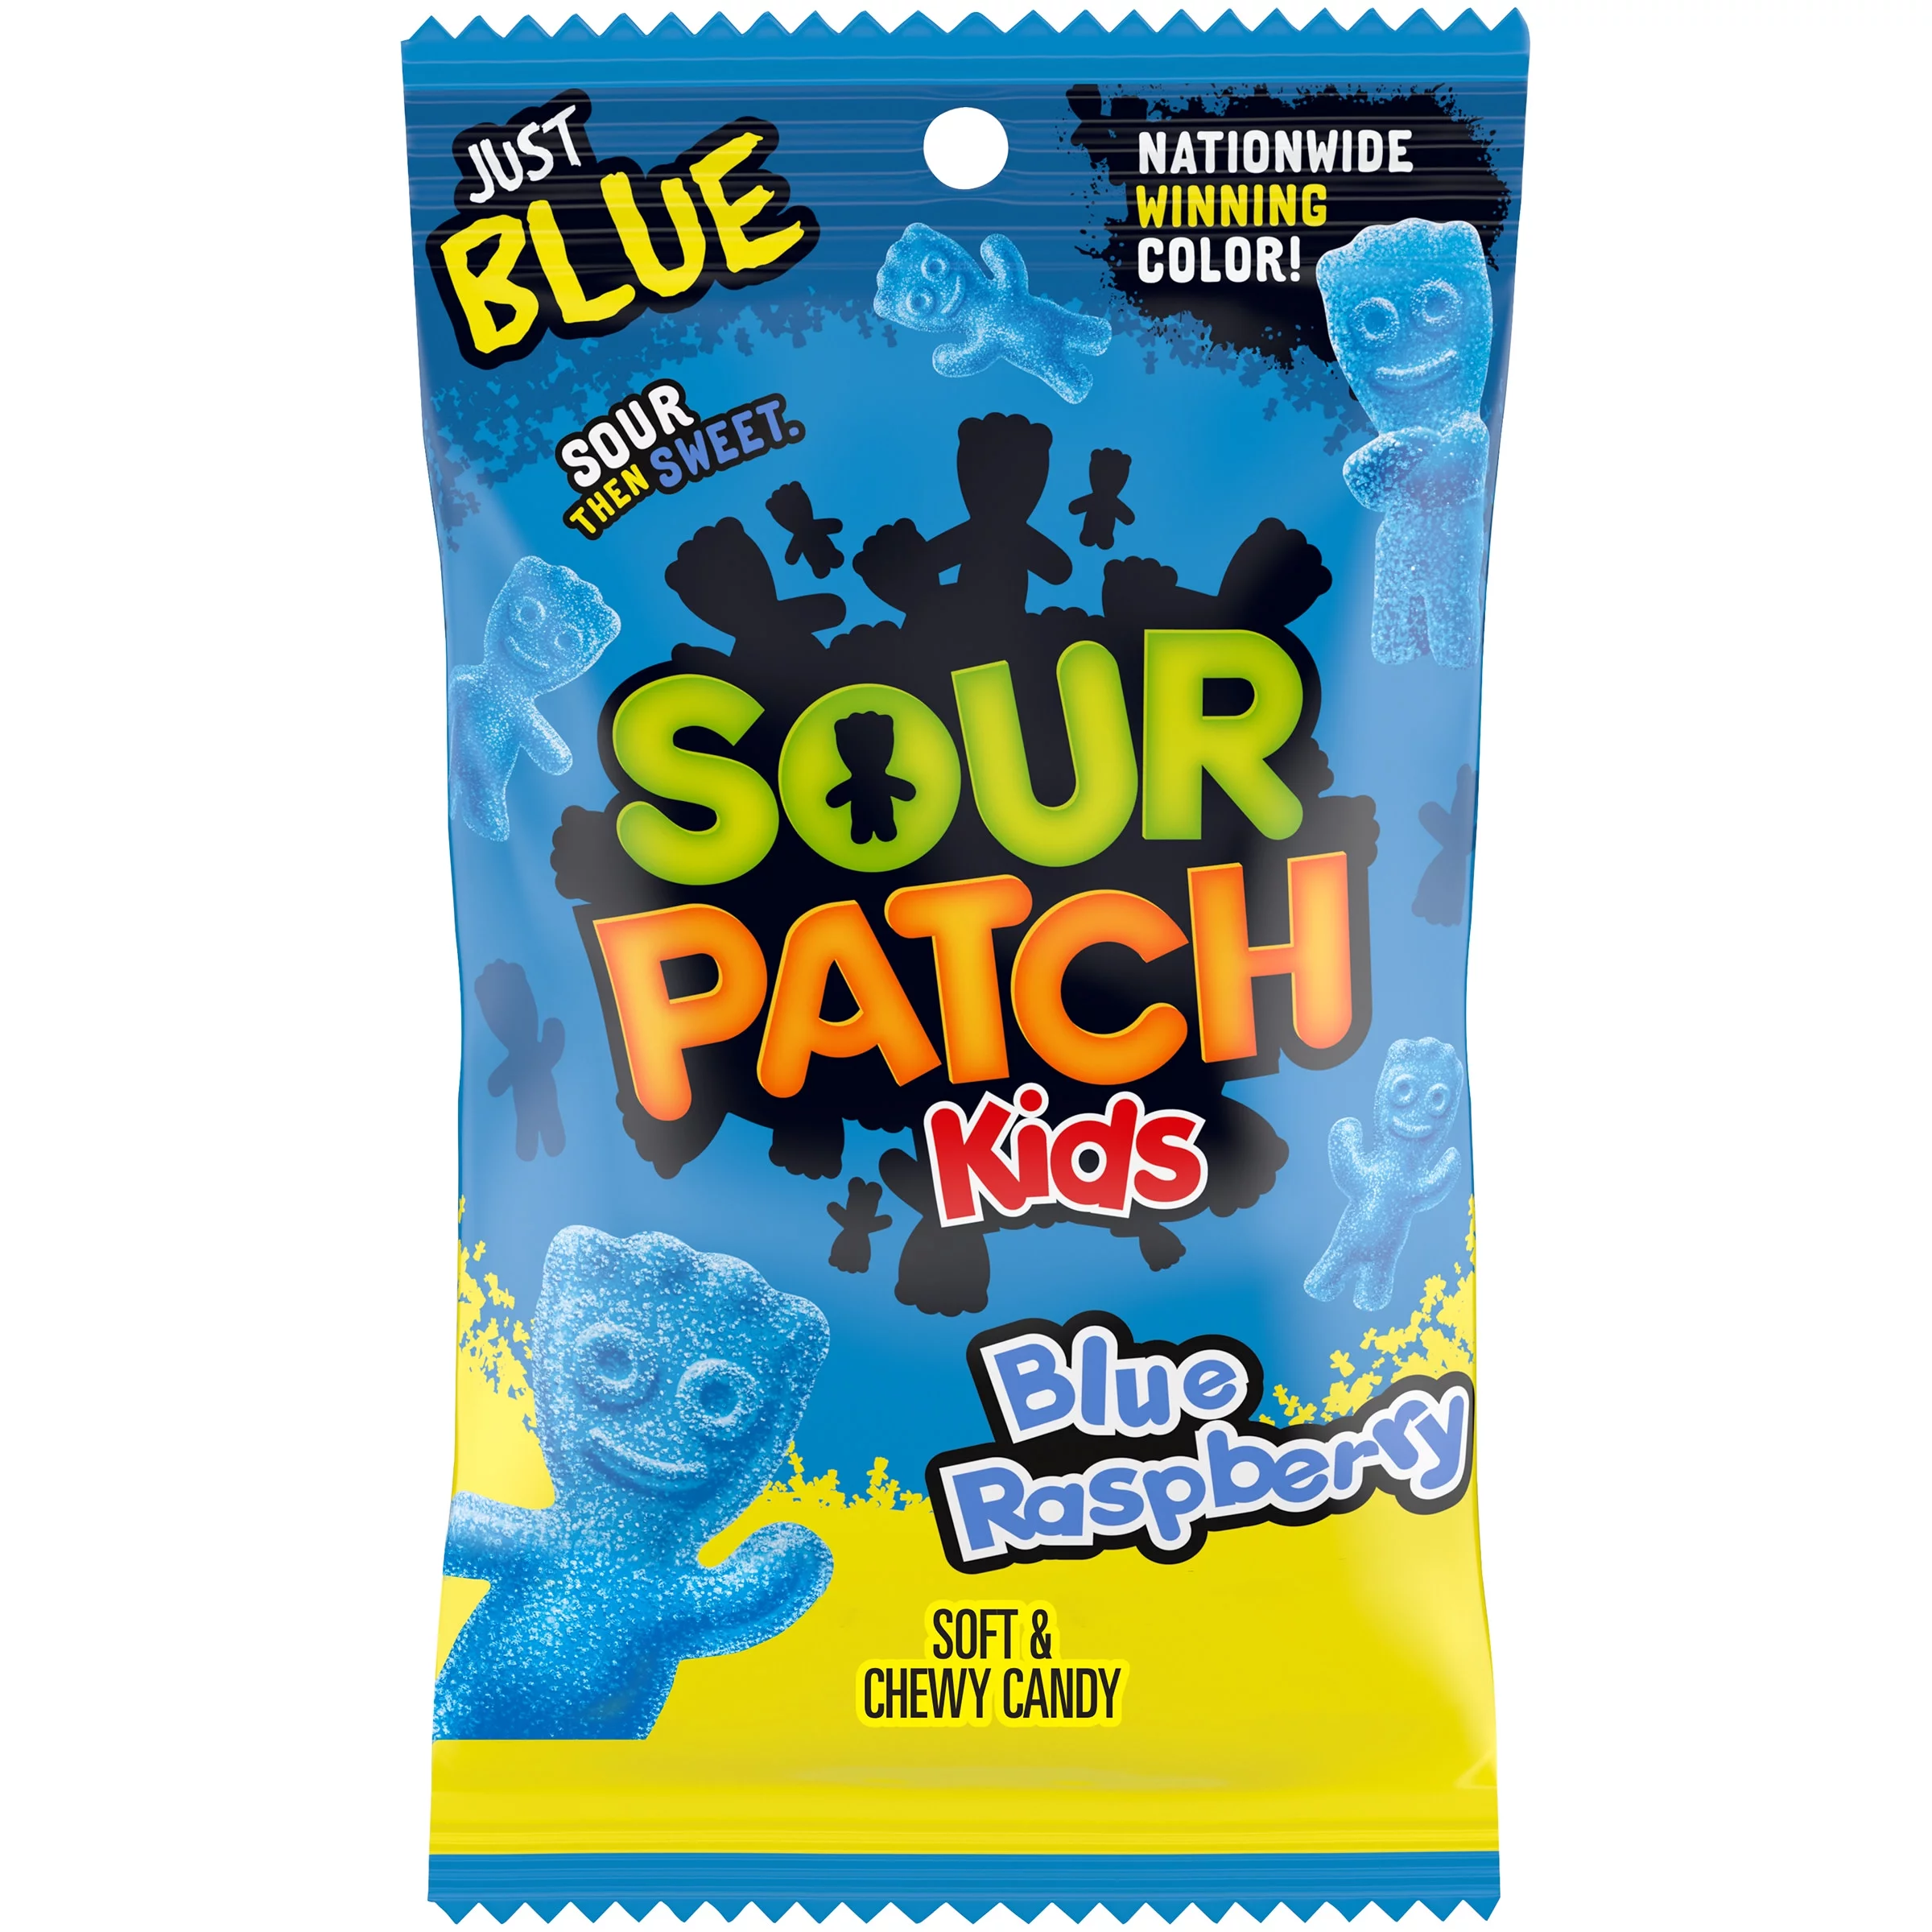 Sour patch kids blue raspberry 8oz